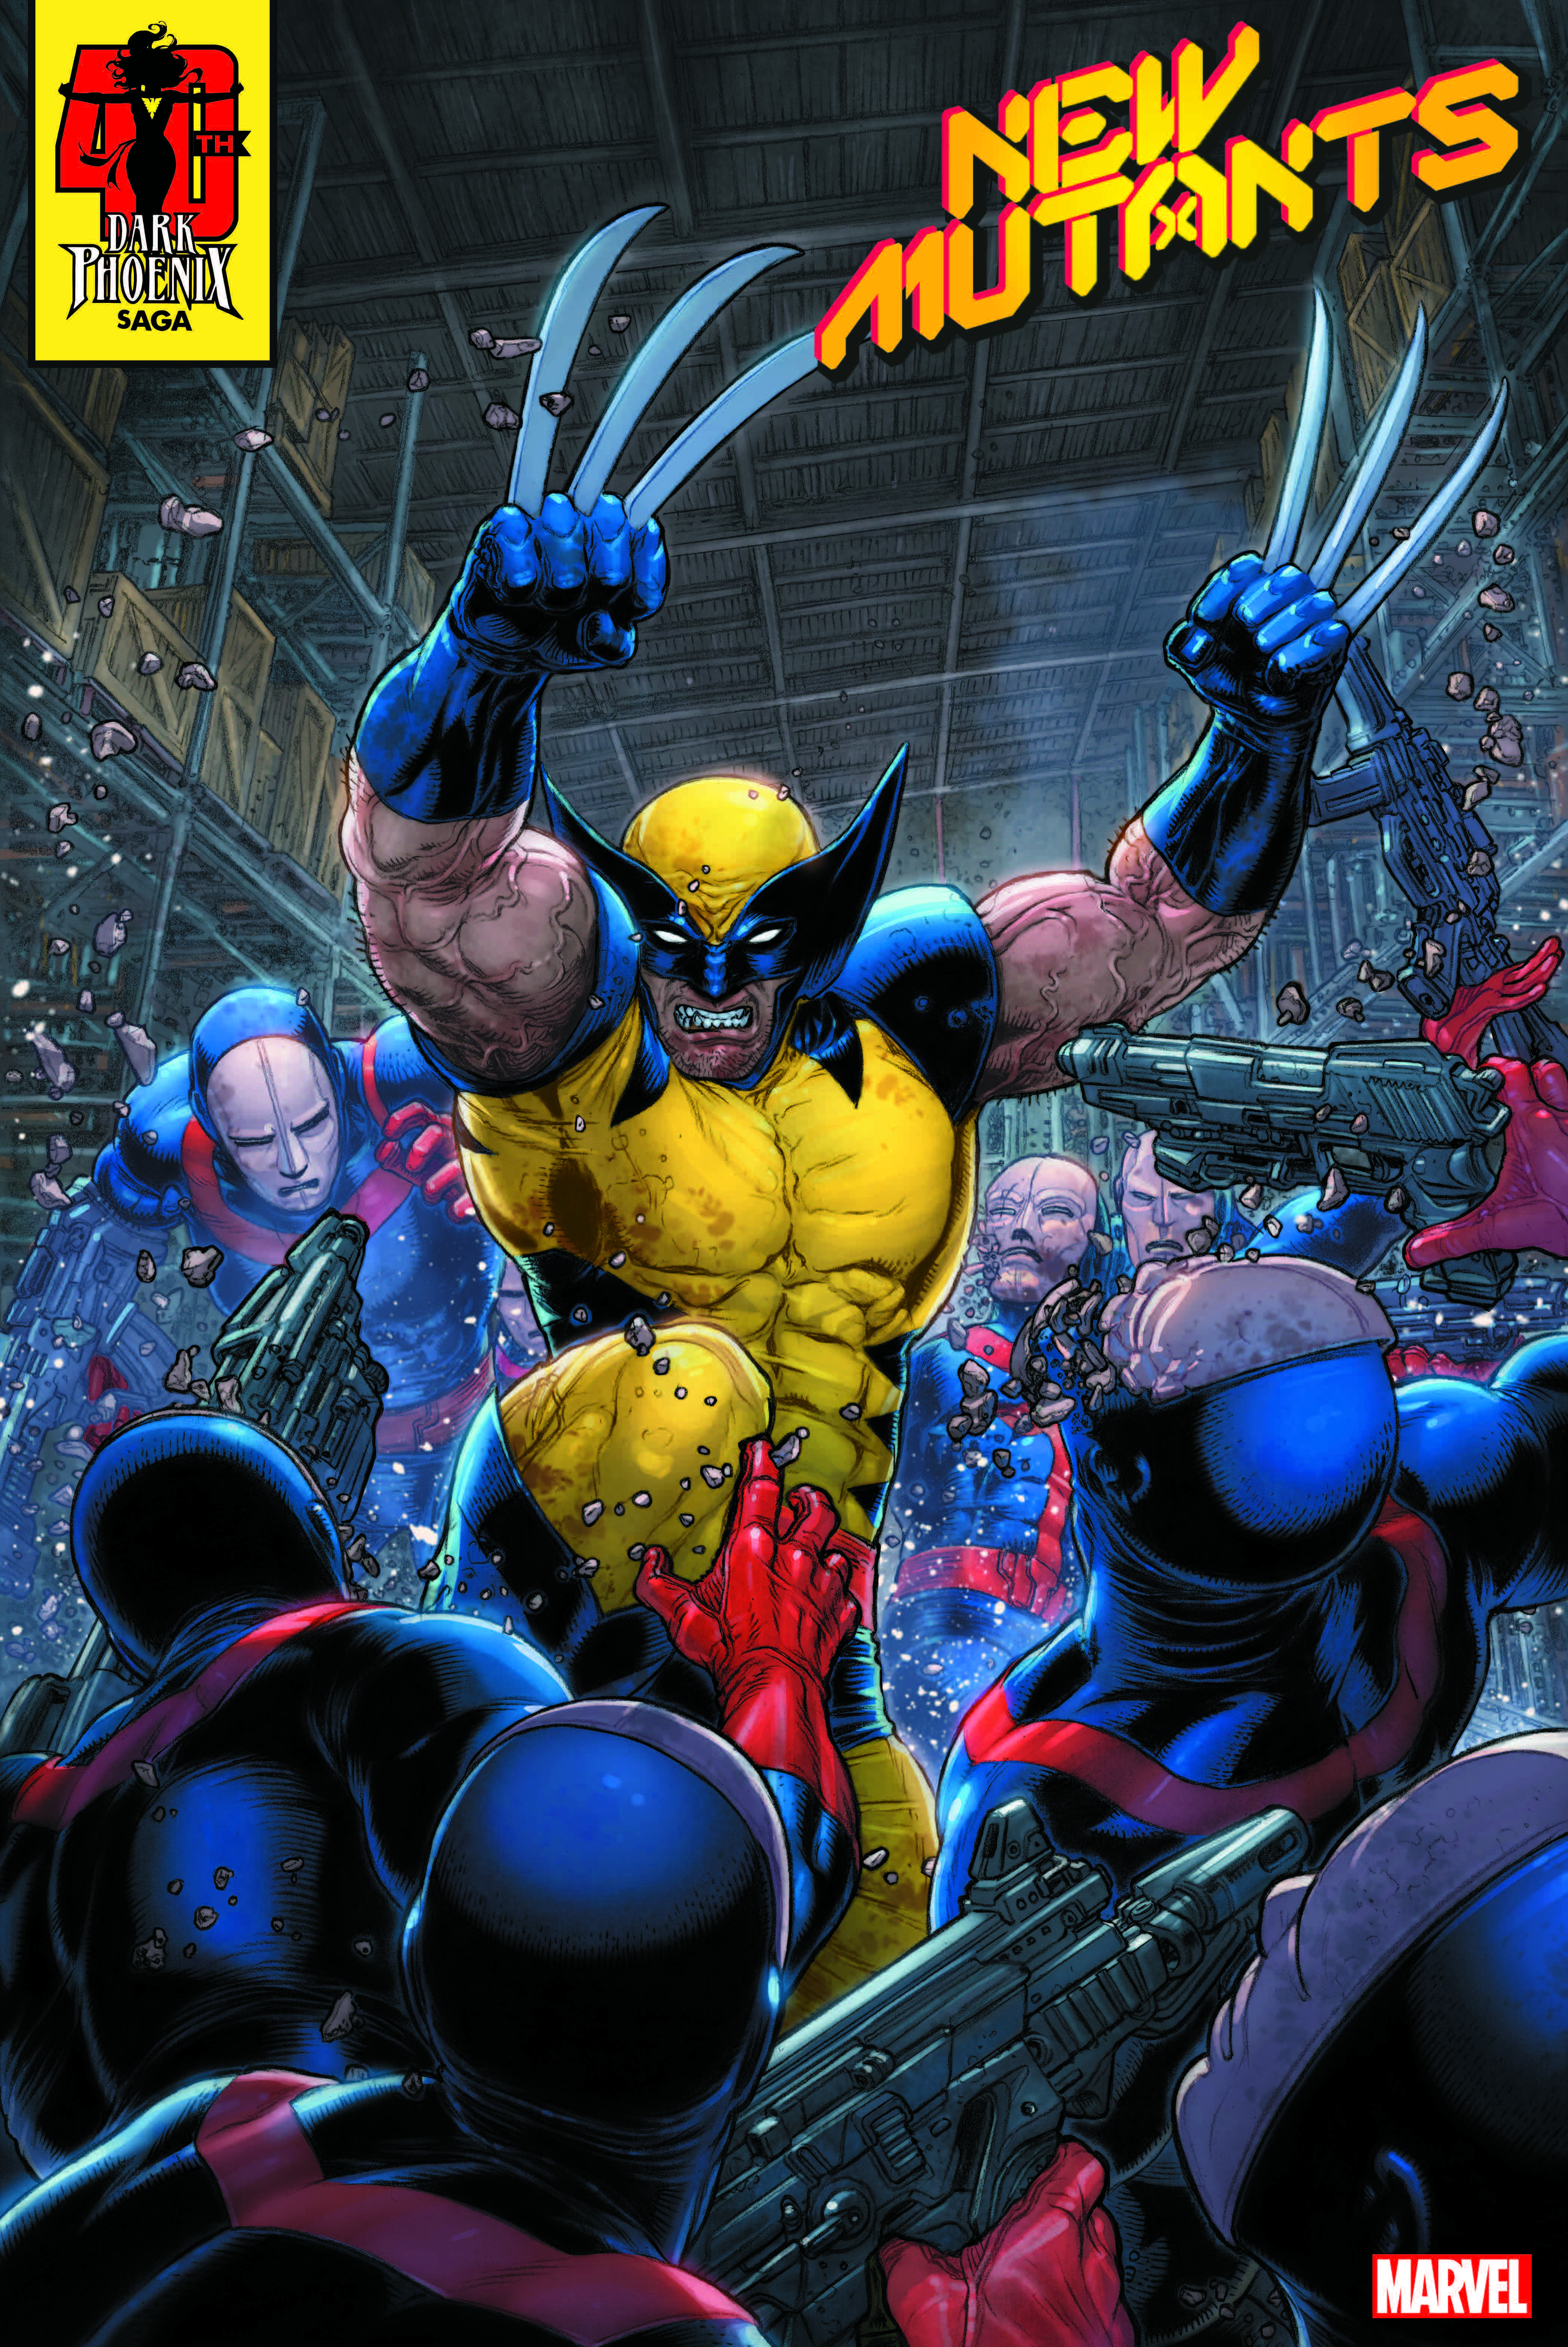 New Mutants #5 Dark Phoenix 40th anniversary variant by Juan José Ryp